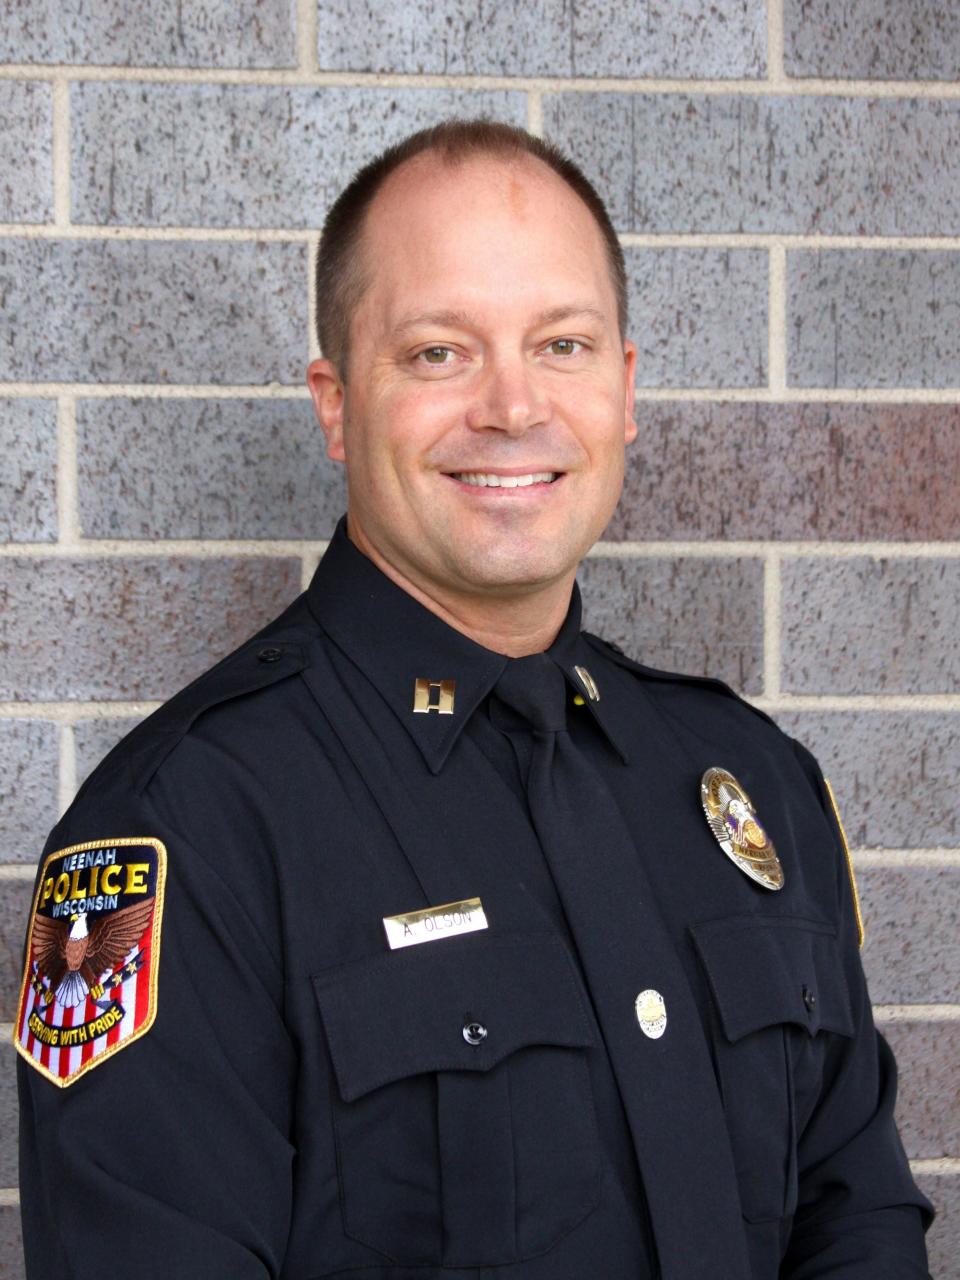 Neenah Police Chief Aaron Olson